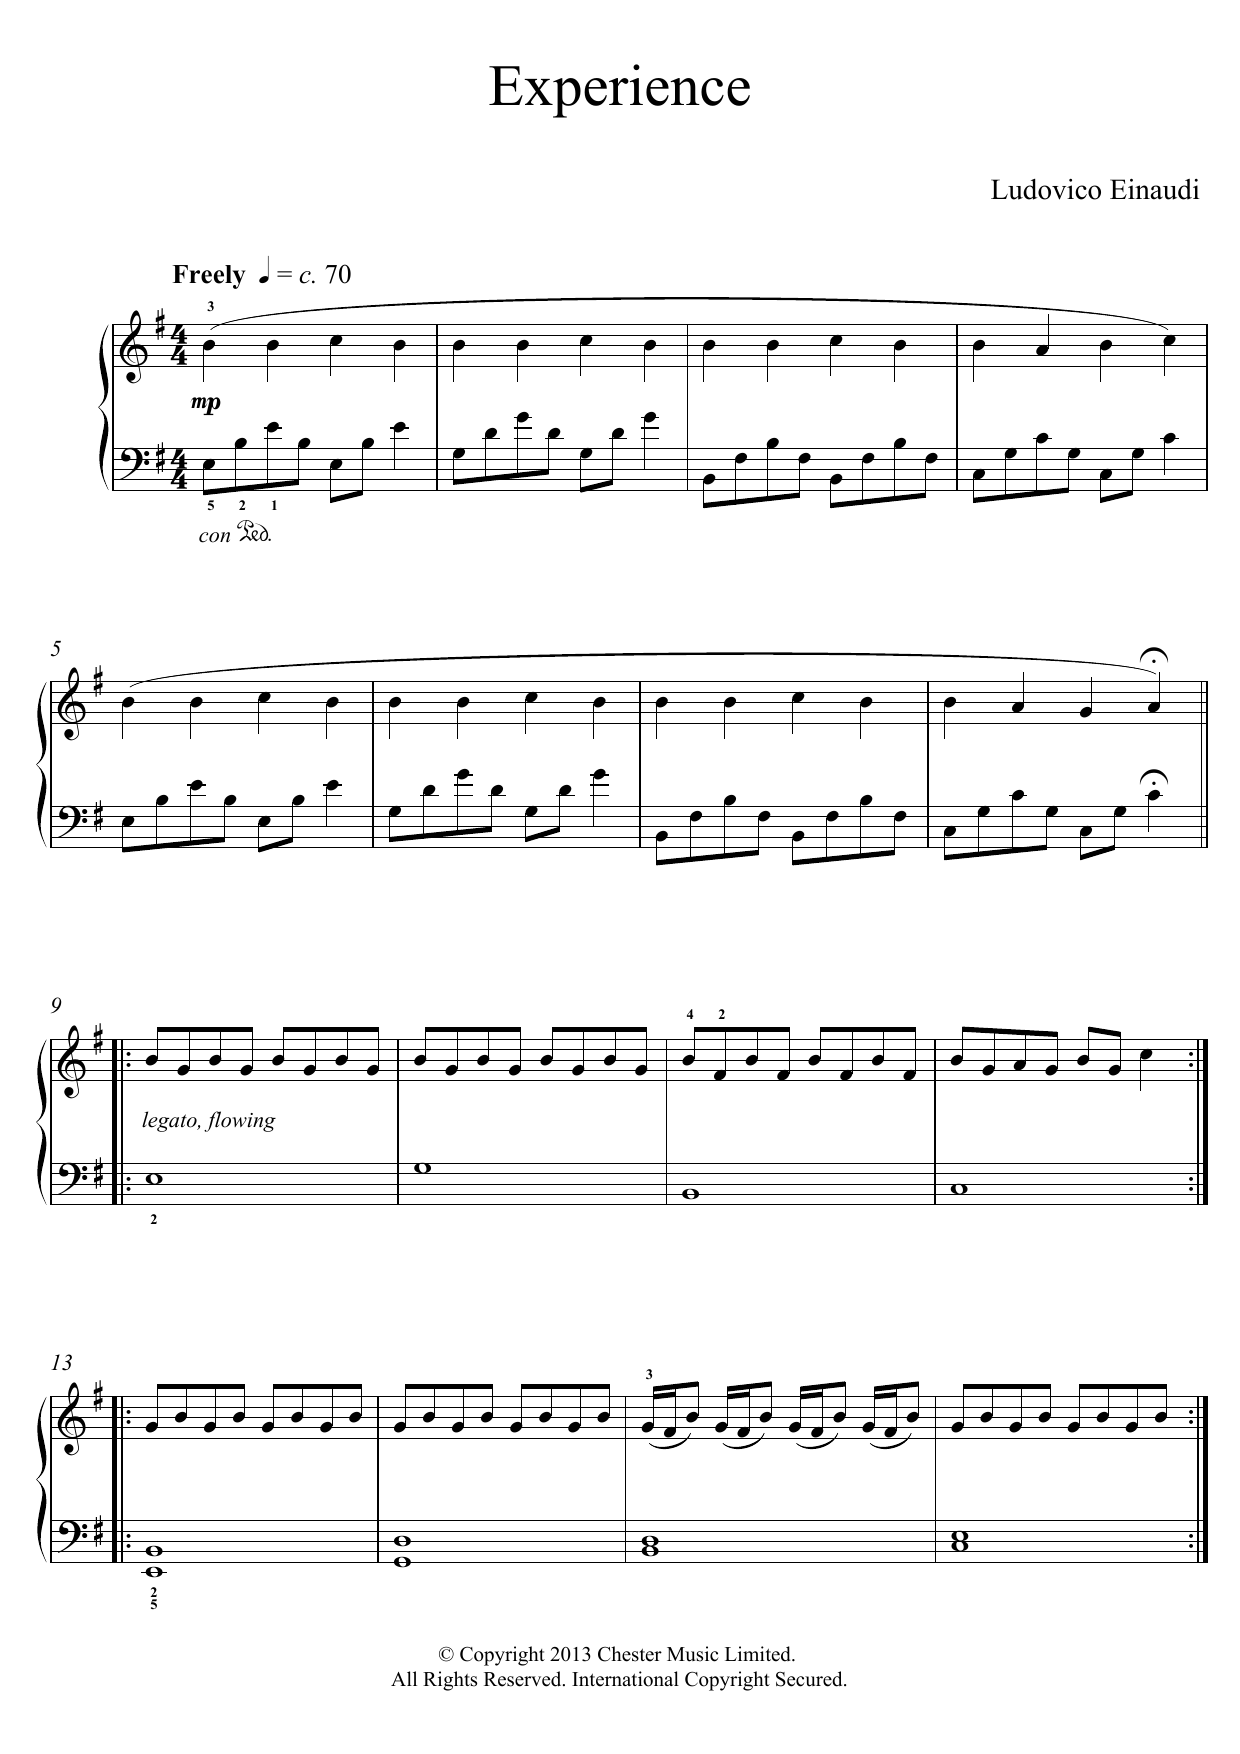 Petricor (abridged) by Ludovico Einaudi - Piano Method - Digital Sheet Music